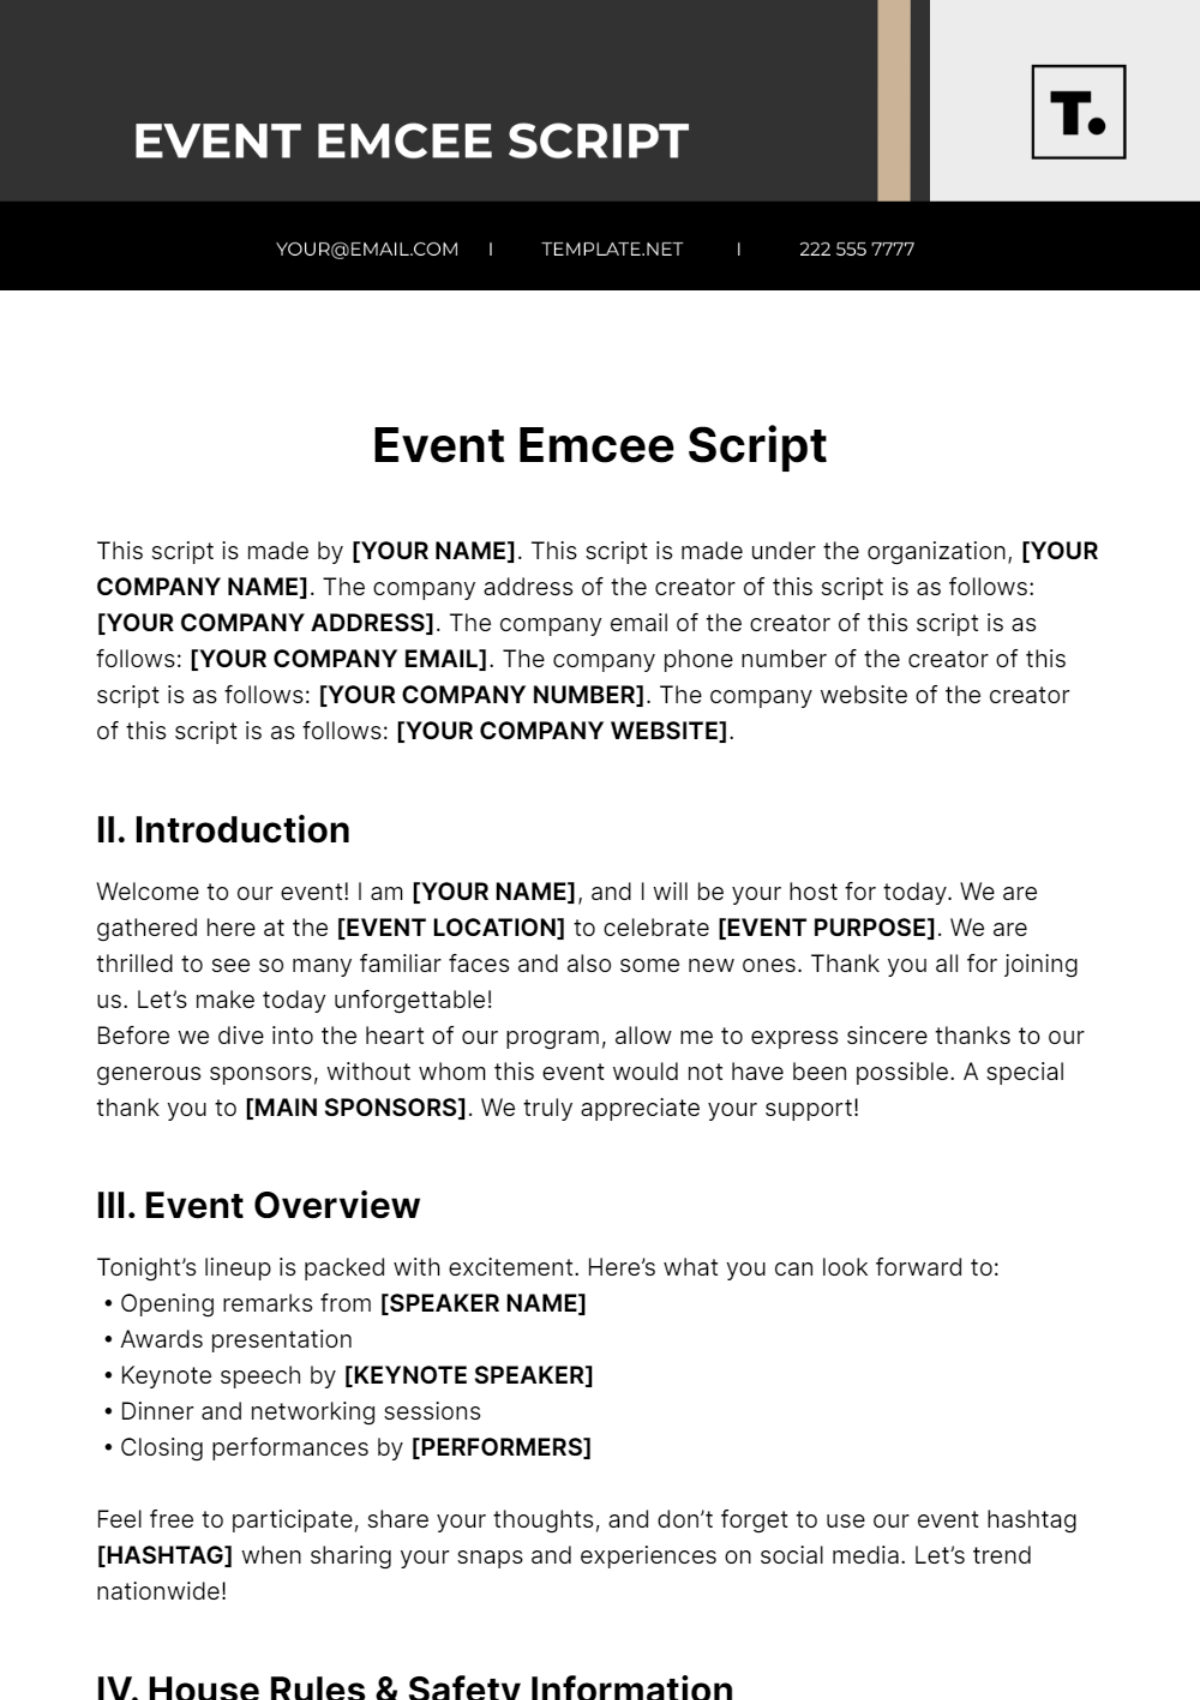 Event Emcee Script Template